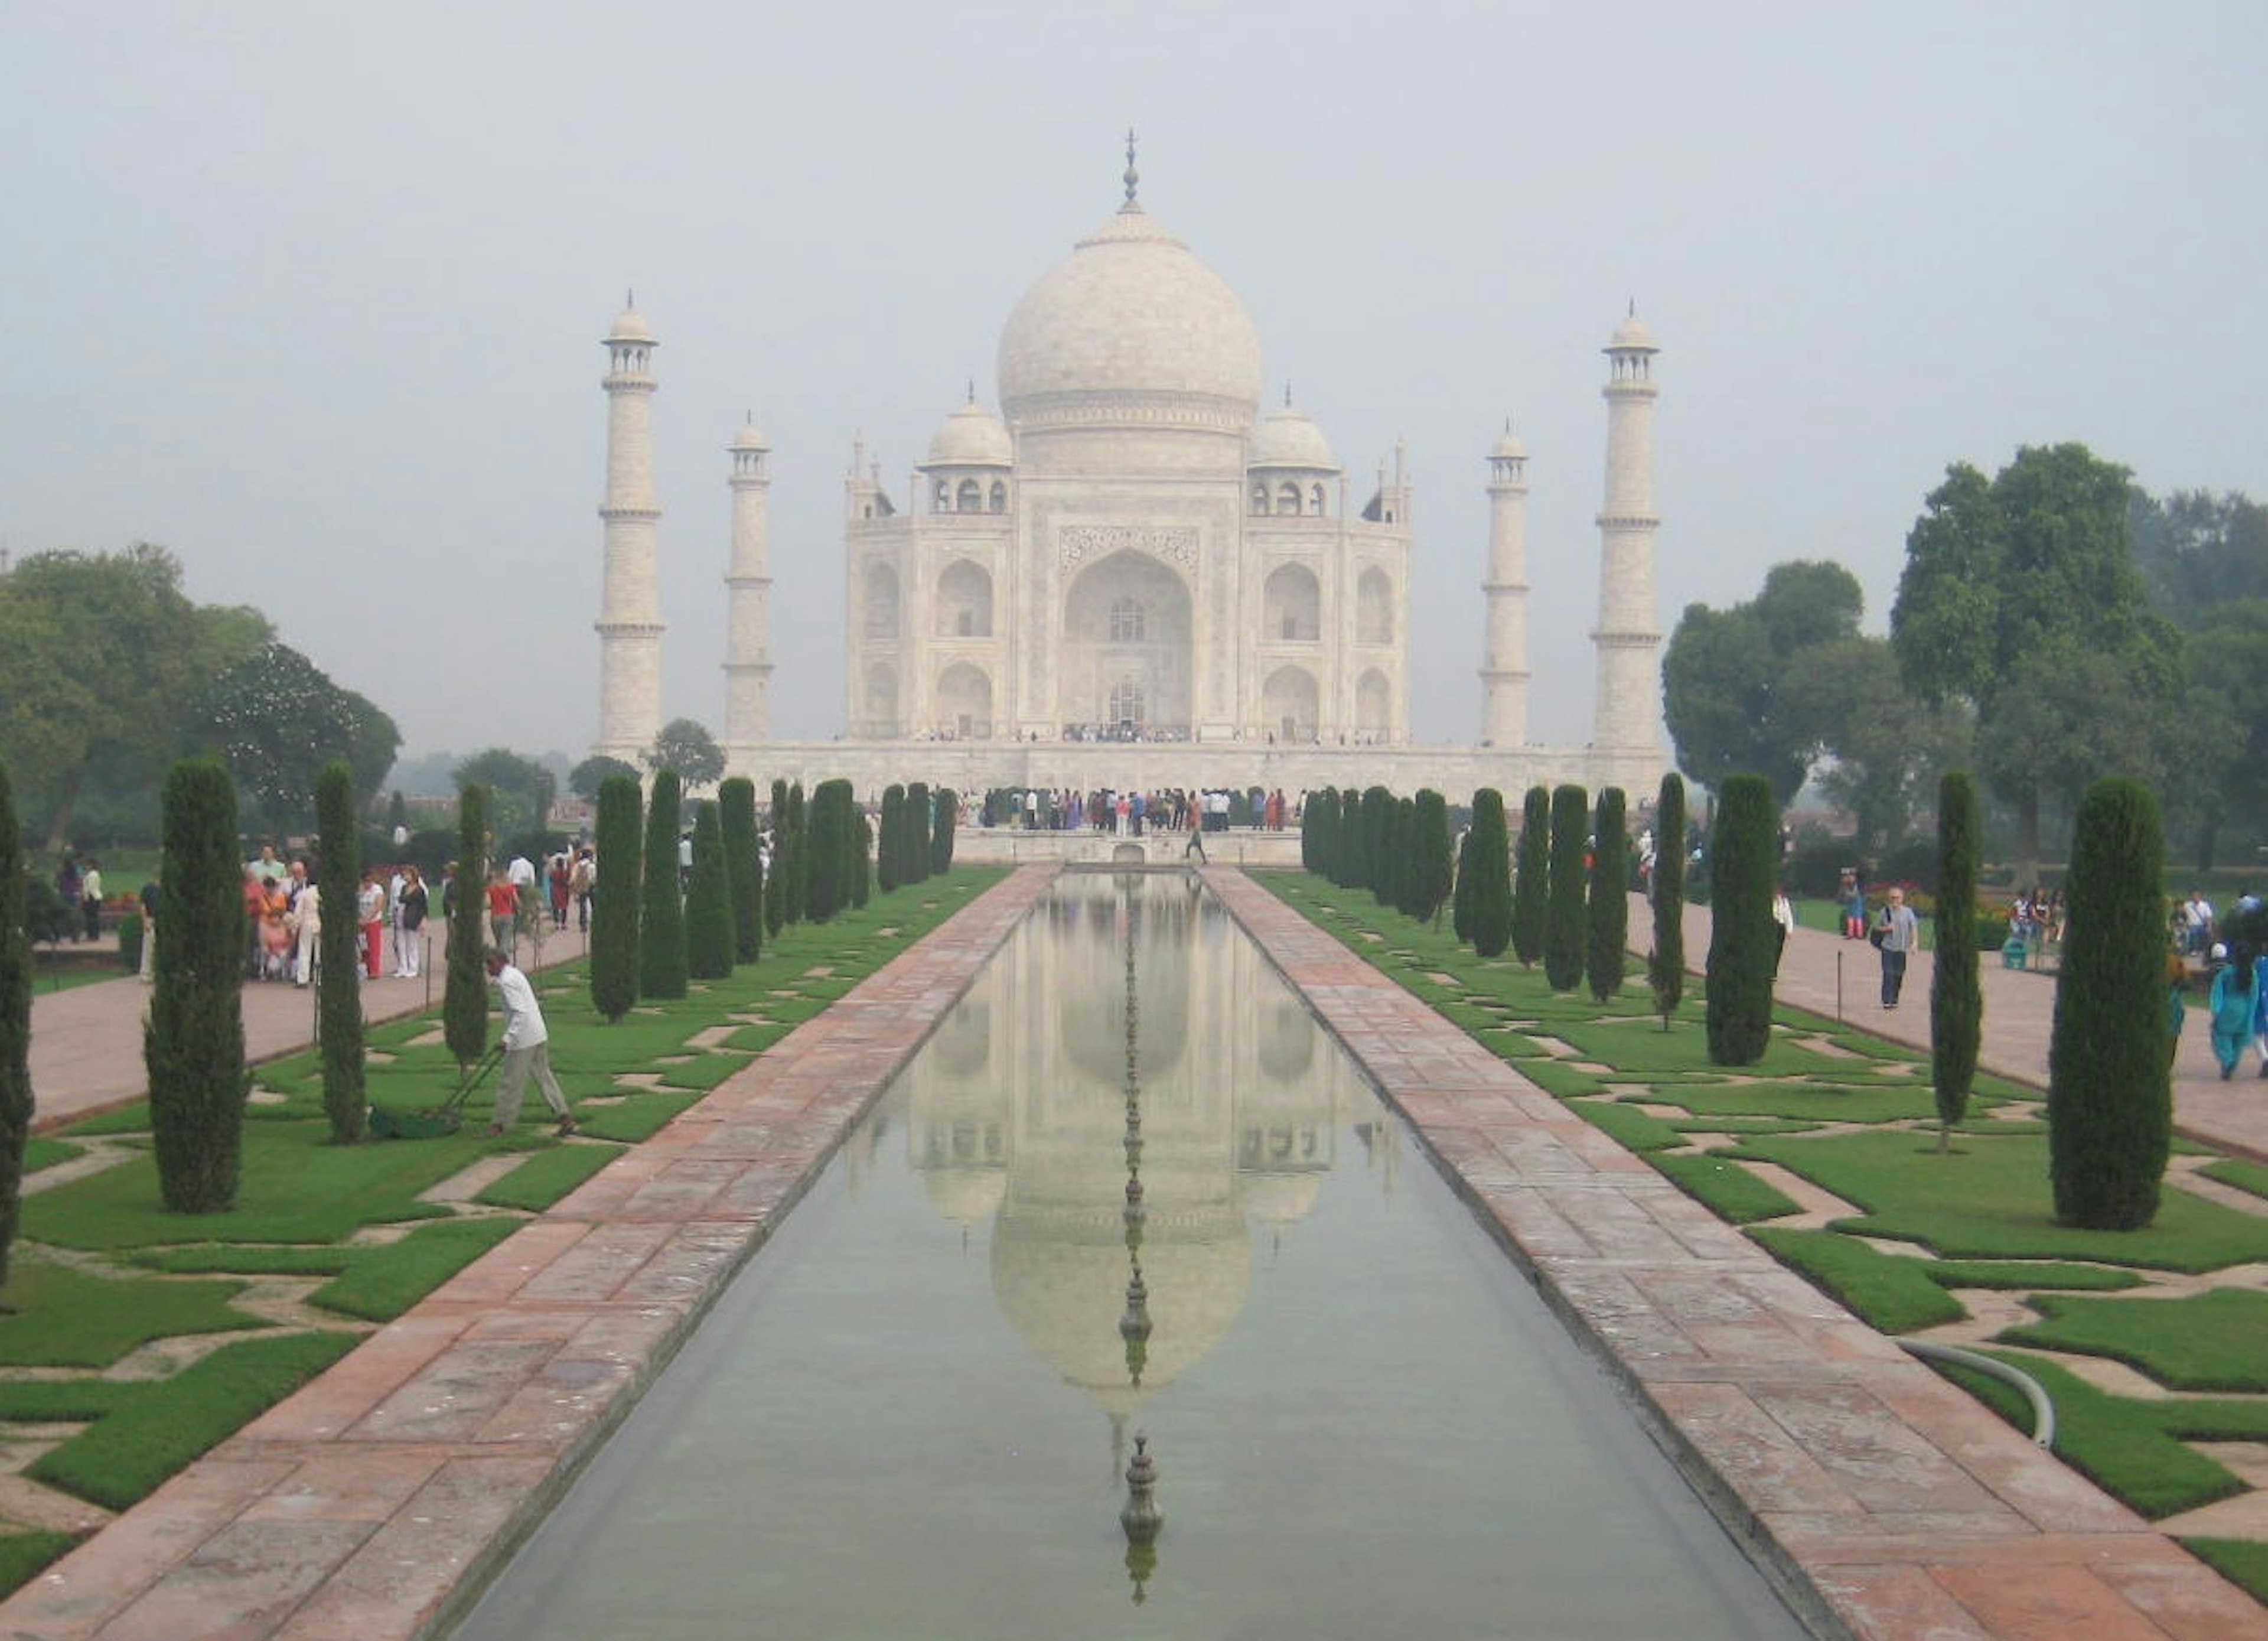 Top 5 views of the Taj Mahal - Lonely Planet